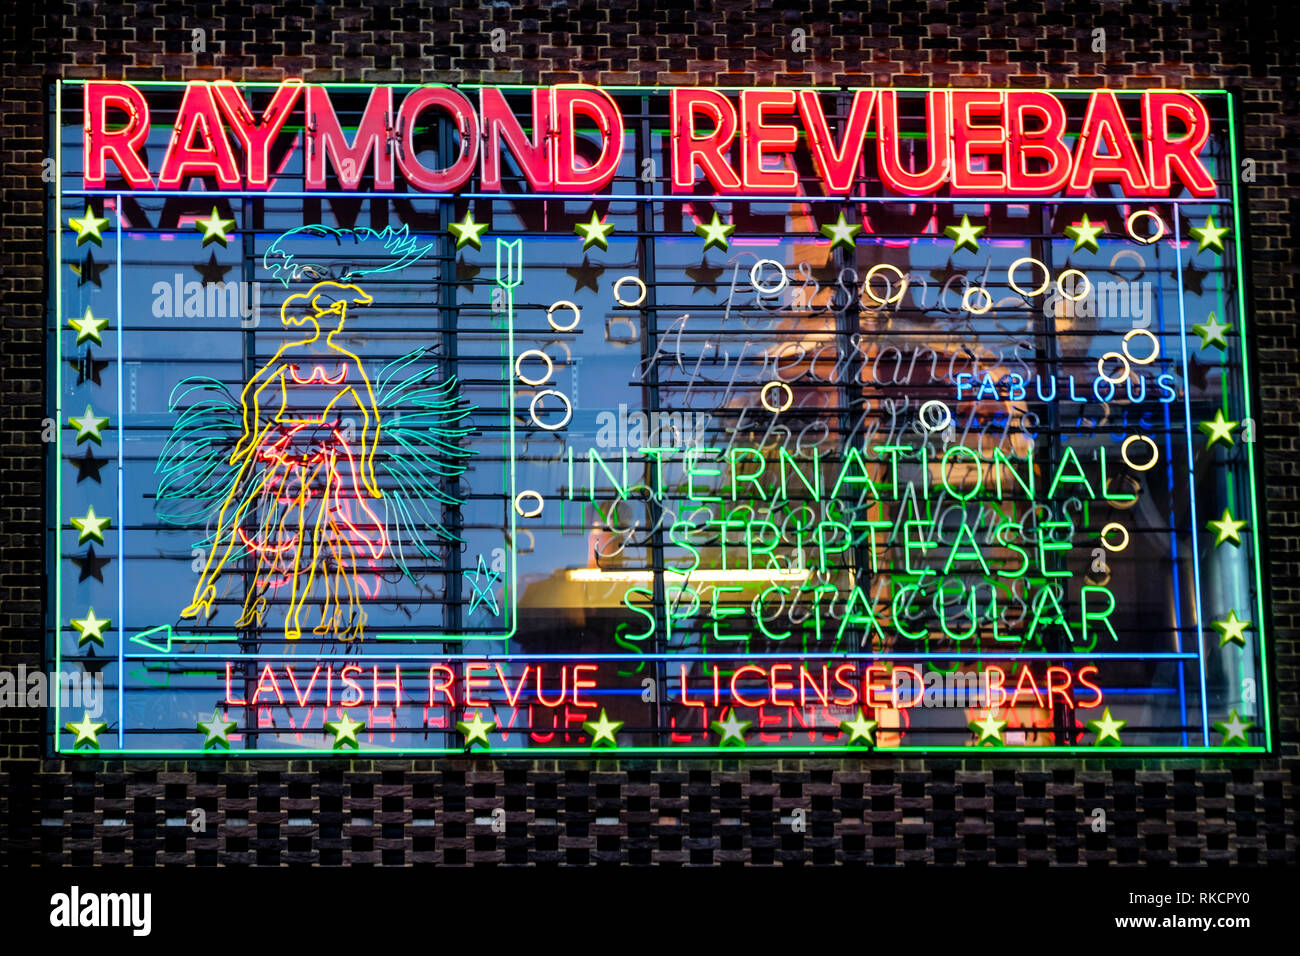 Raymond Revue Bar, Leuchtreklame, Soho, London, UK Stockfoto